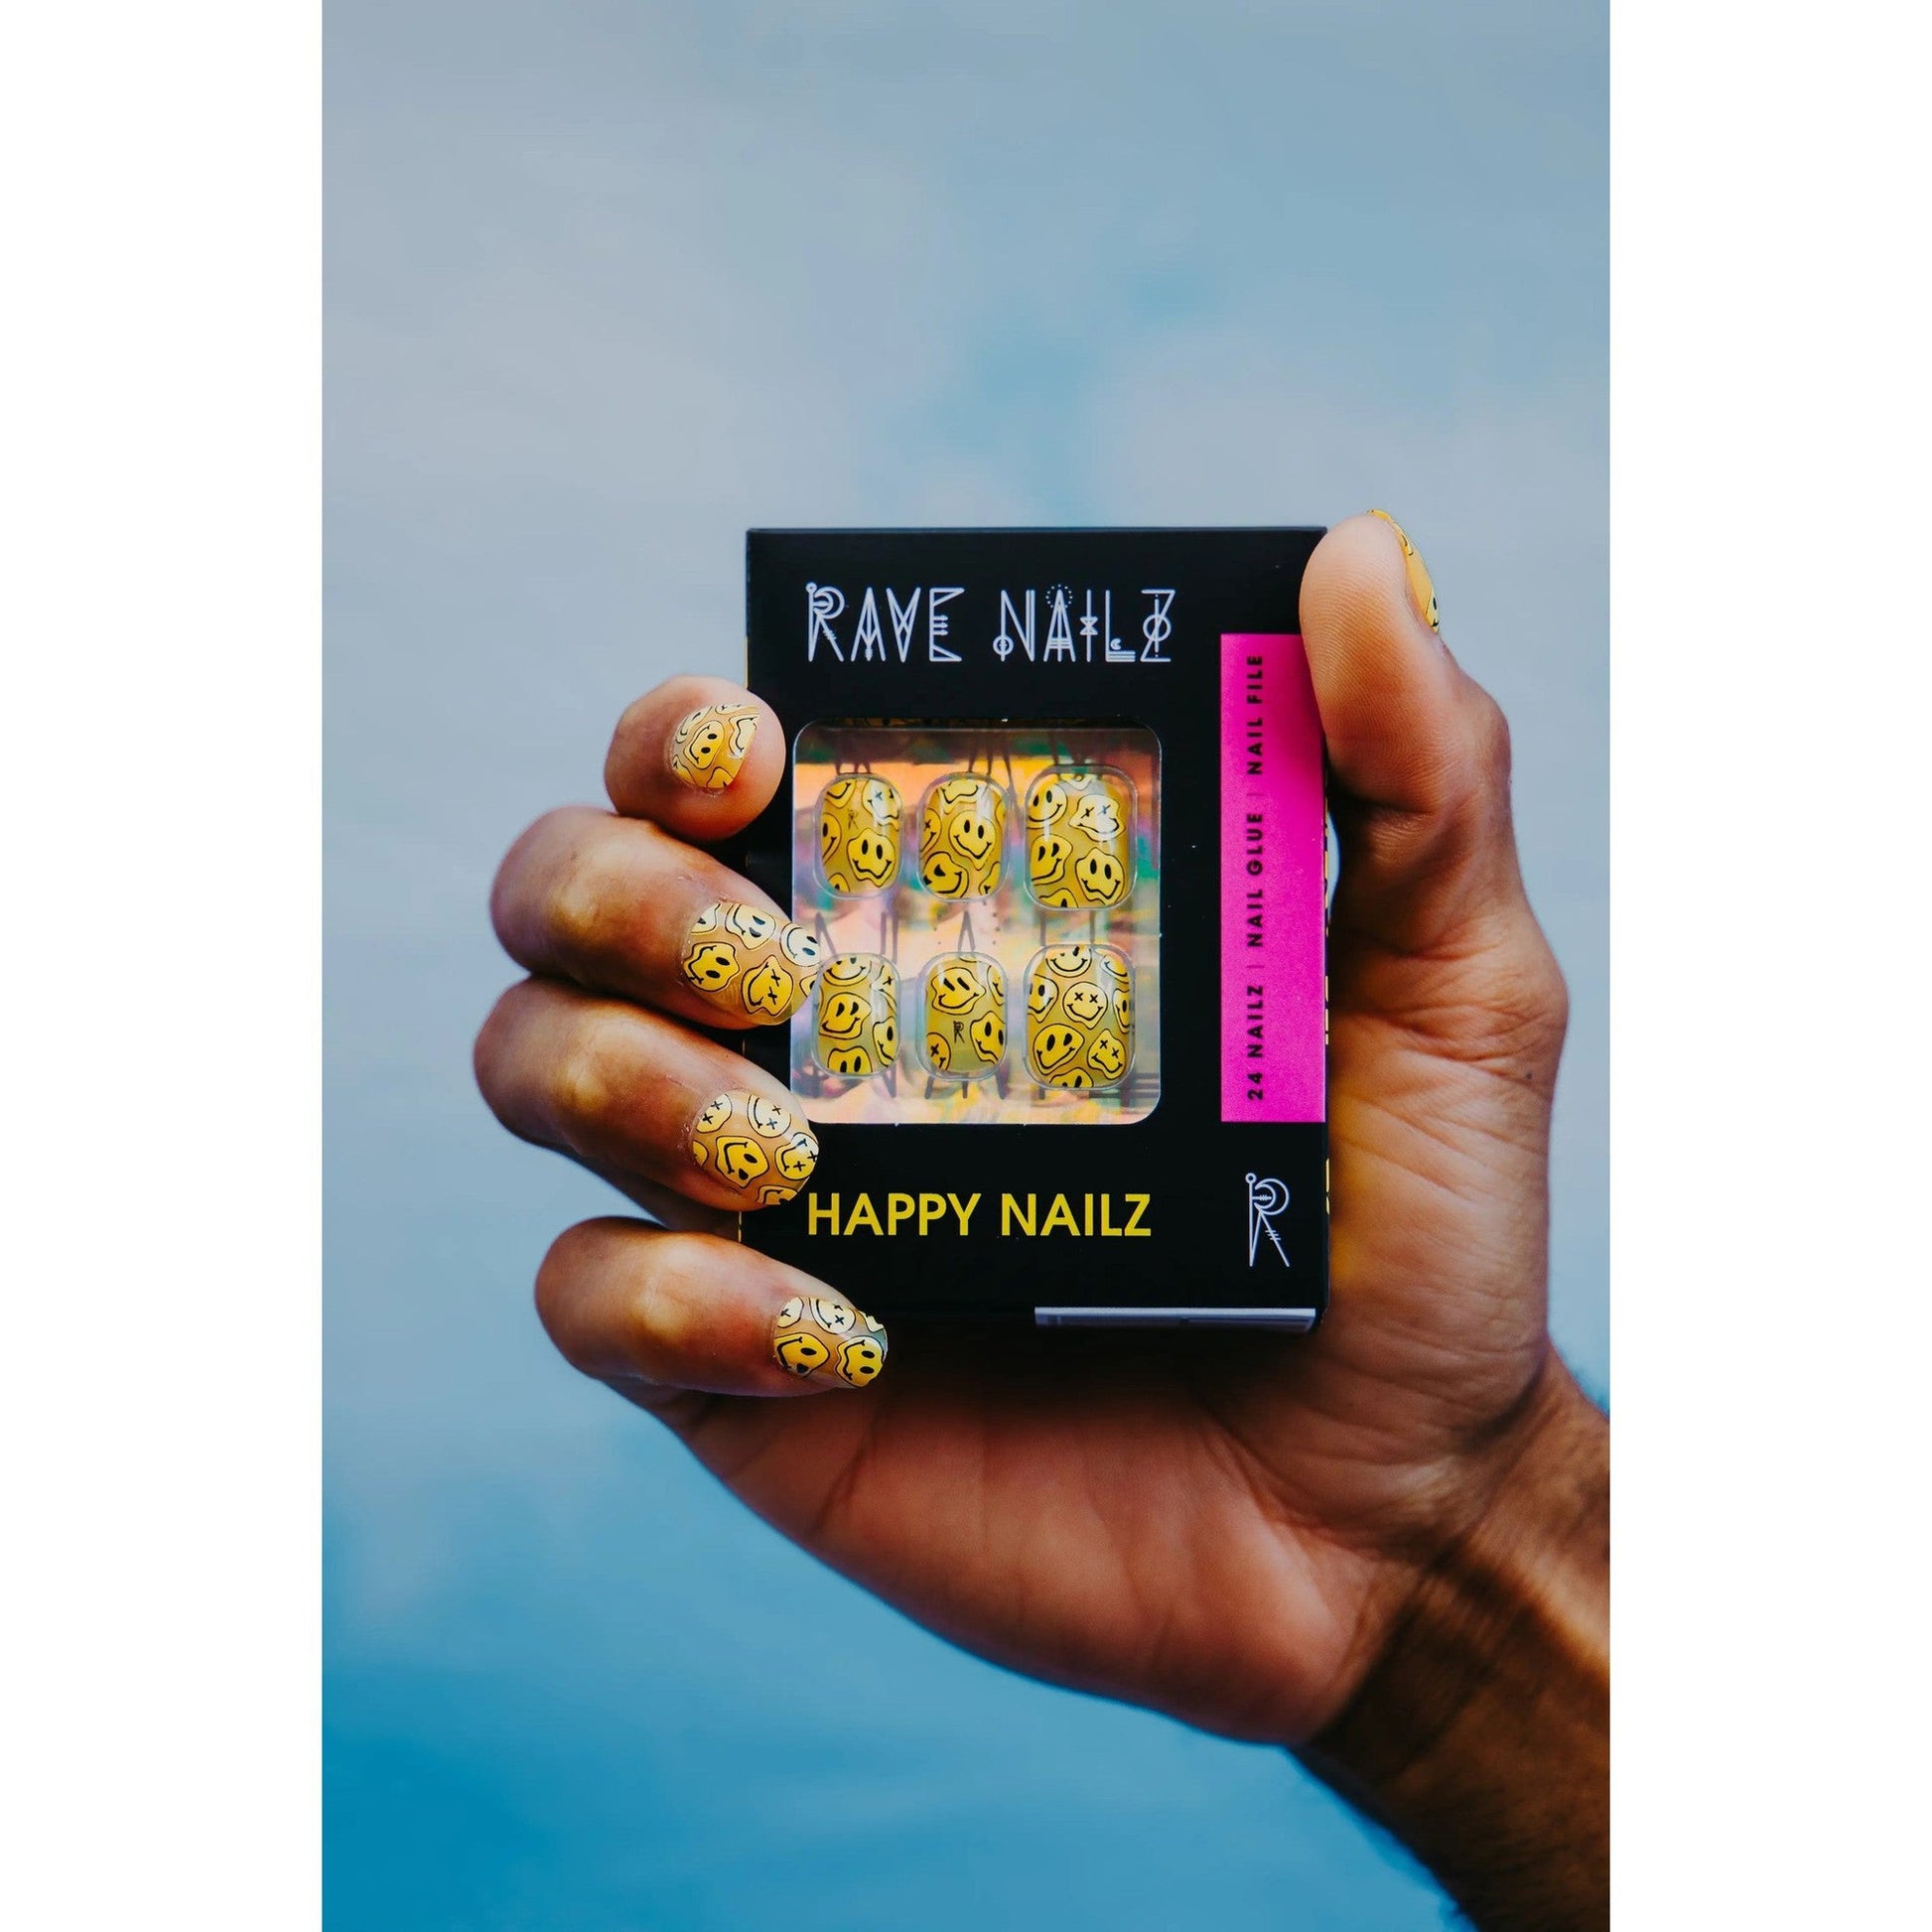 Happy Nailz | Press On Nail Kit Includes 24 Nails